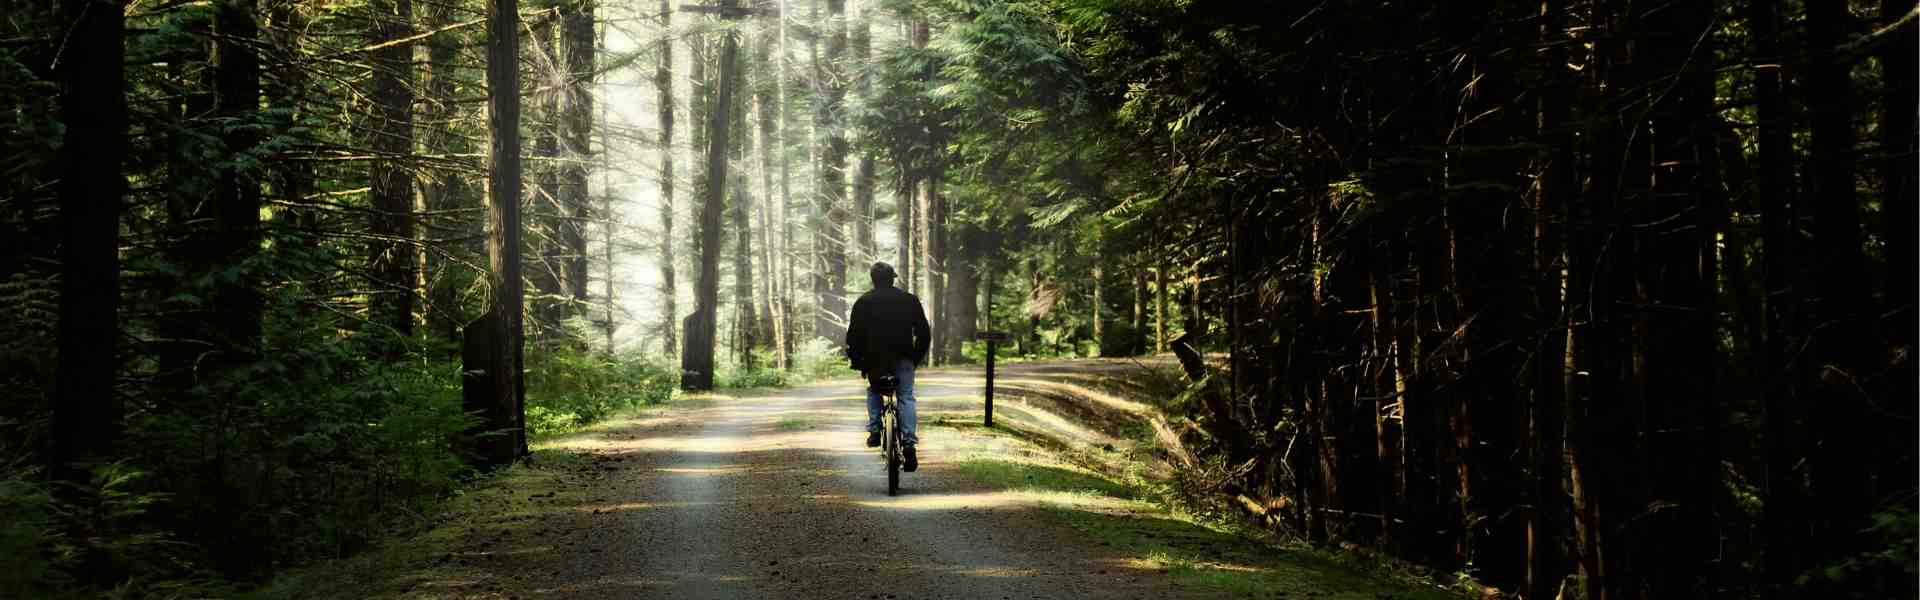 e-Biker im Wald